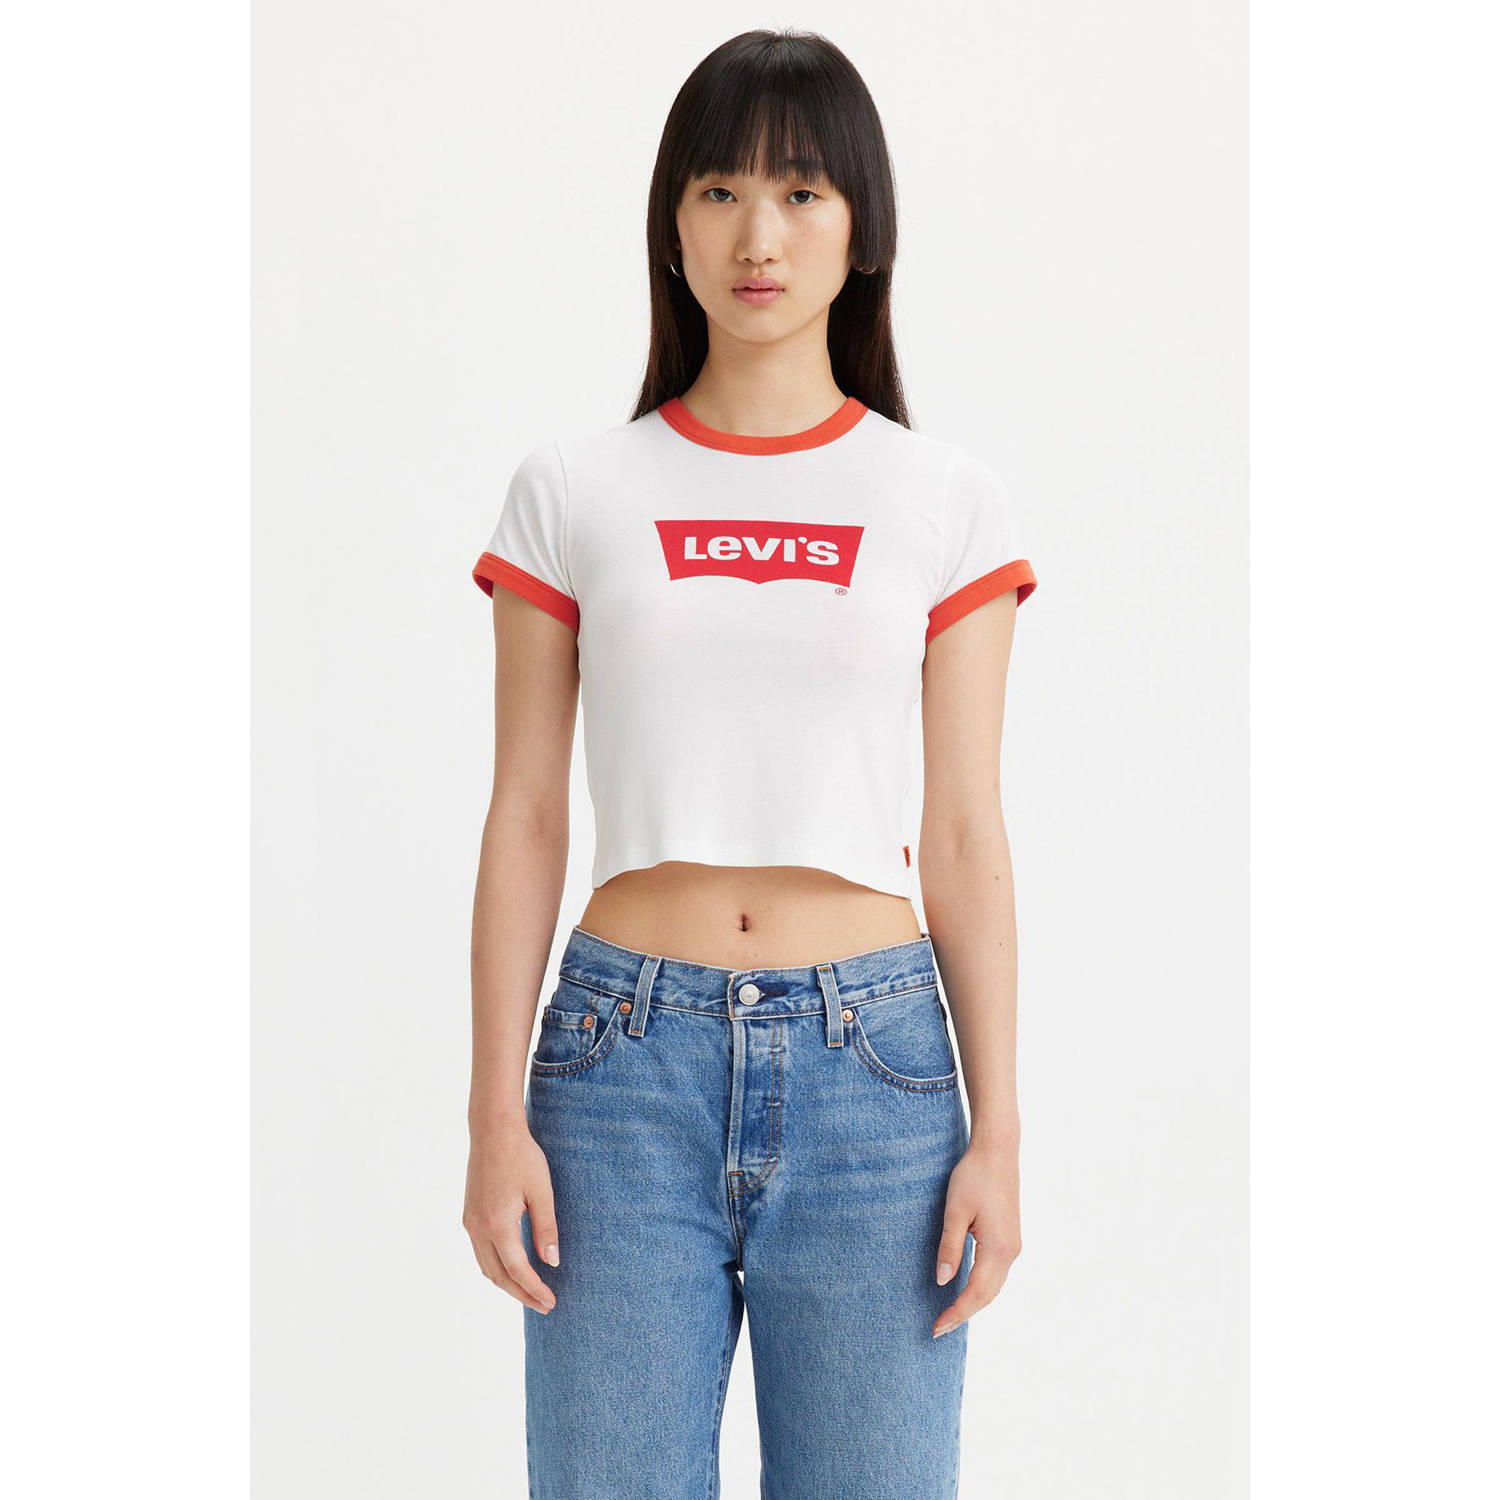 Levi's T-shirt met logo wit rood